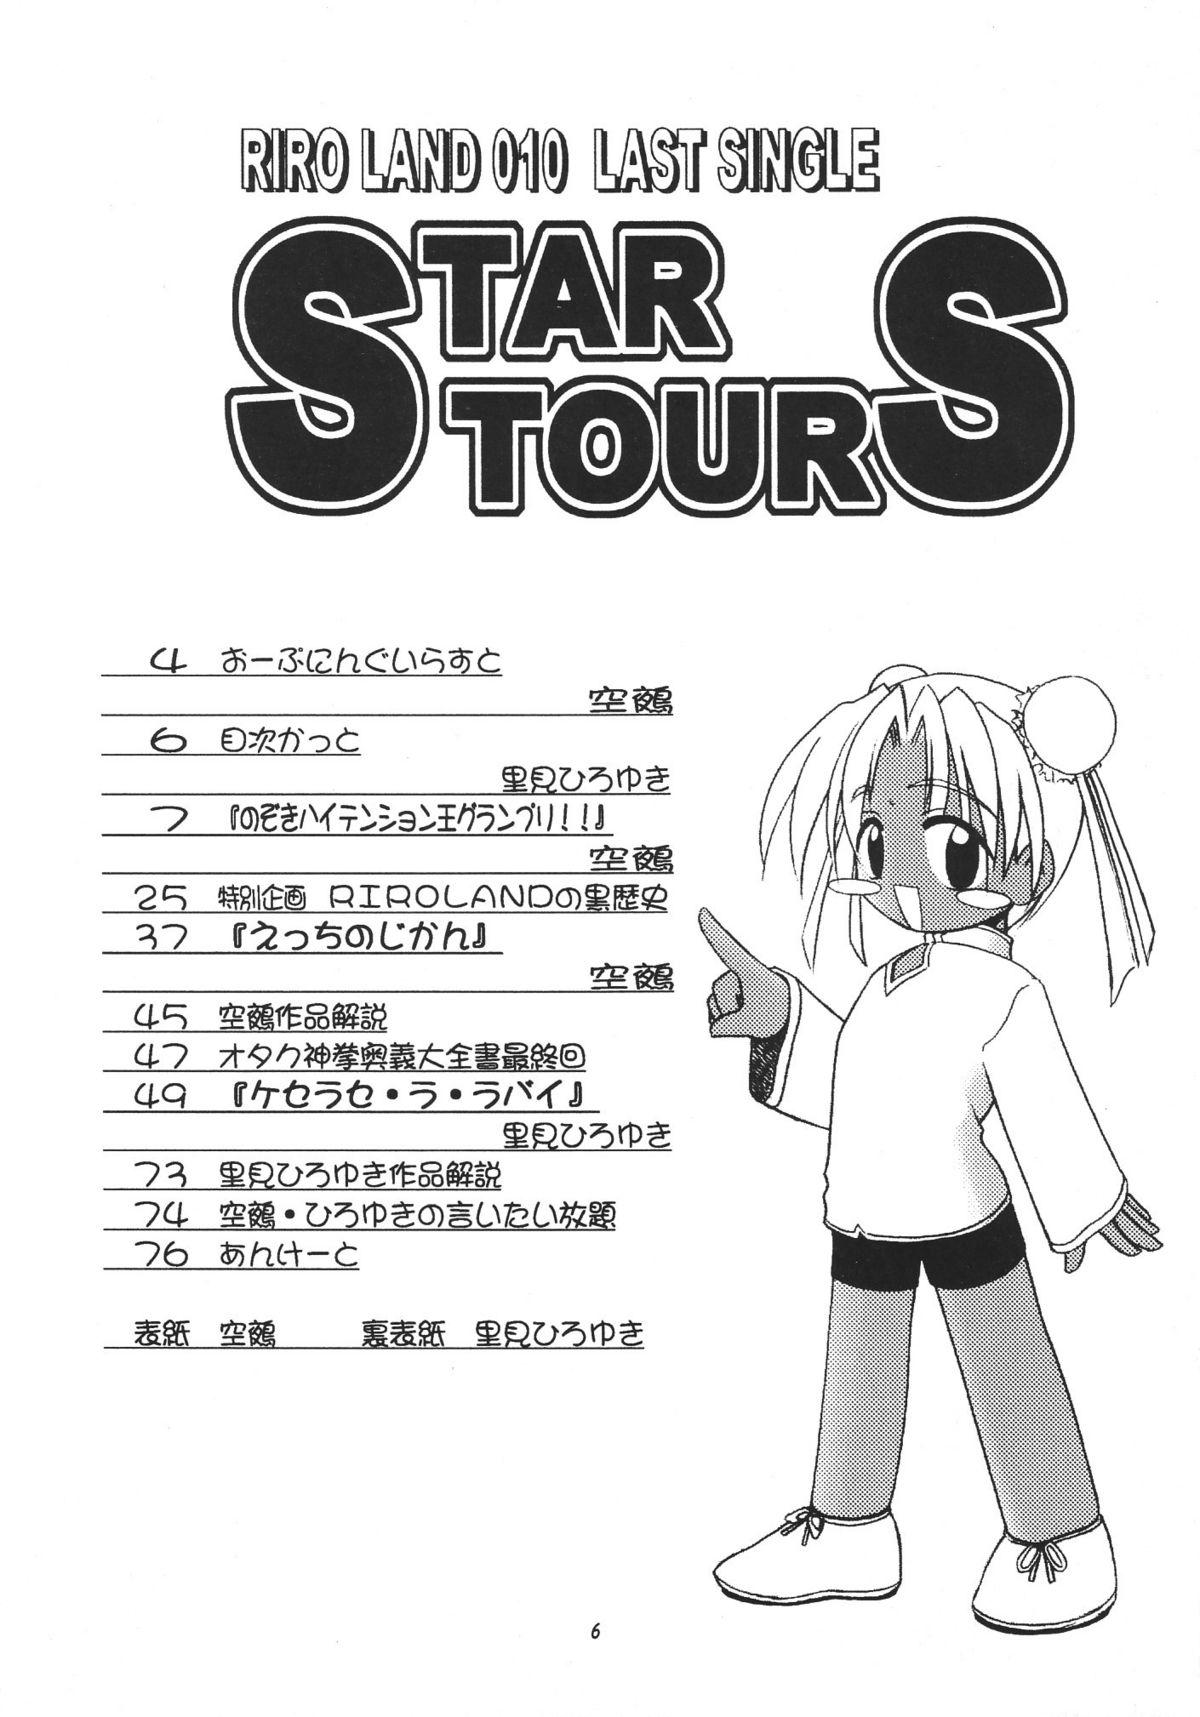 Star tourS 6